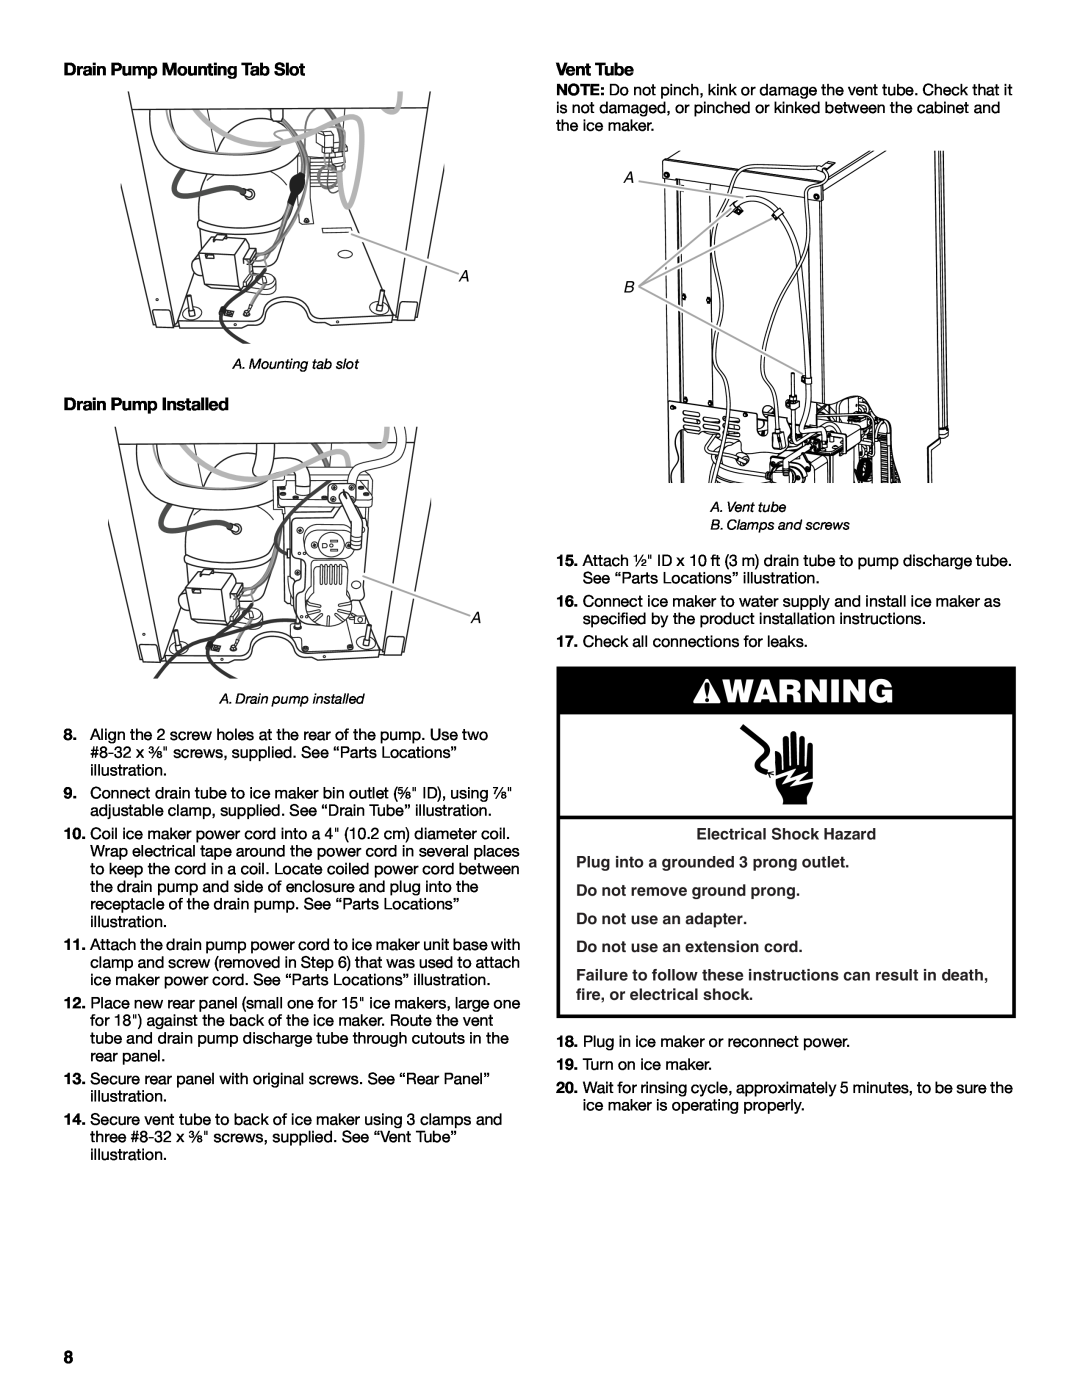 KitchenAid W10515677C manual Drain Pump Mounting Tab Slot, Drain Pump Installed, Vent Tube, Do not use an extension cord 